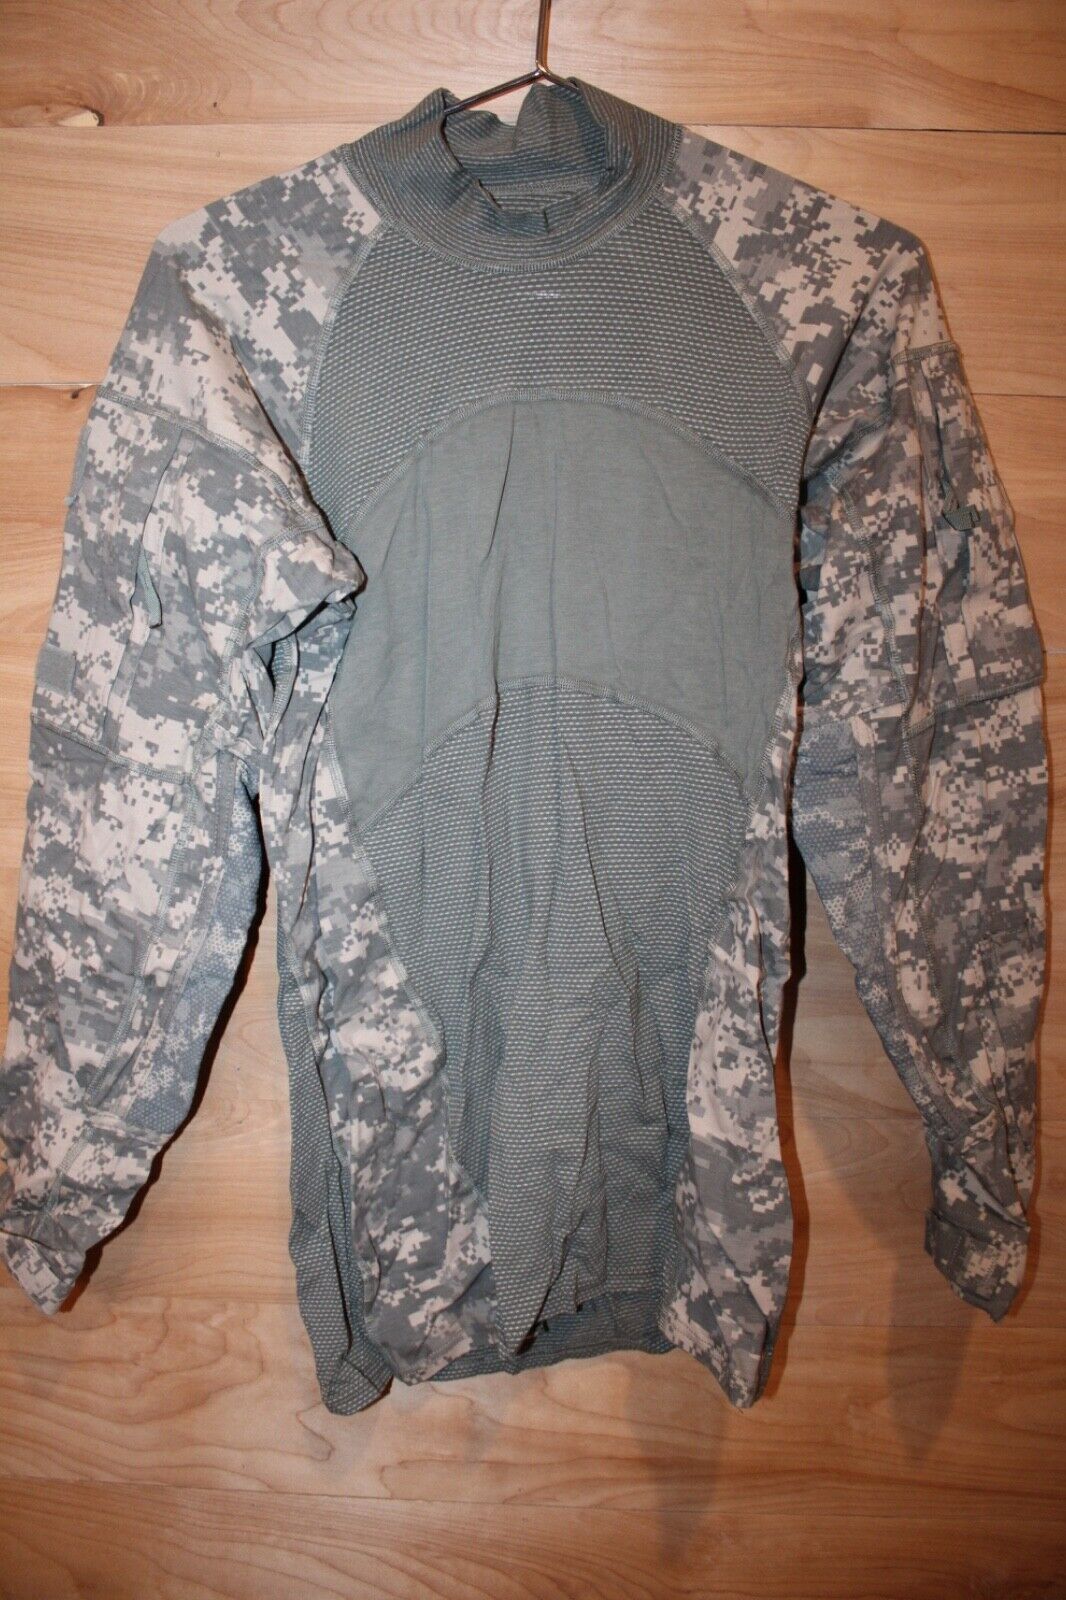 MASSIF Medium ACU Army Combat Shirt ACS Digital Camo USGI Military NWOT